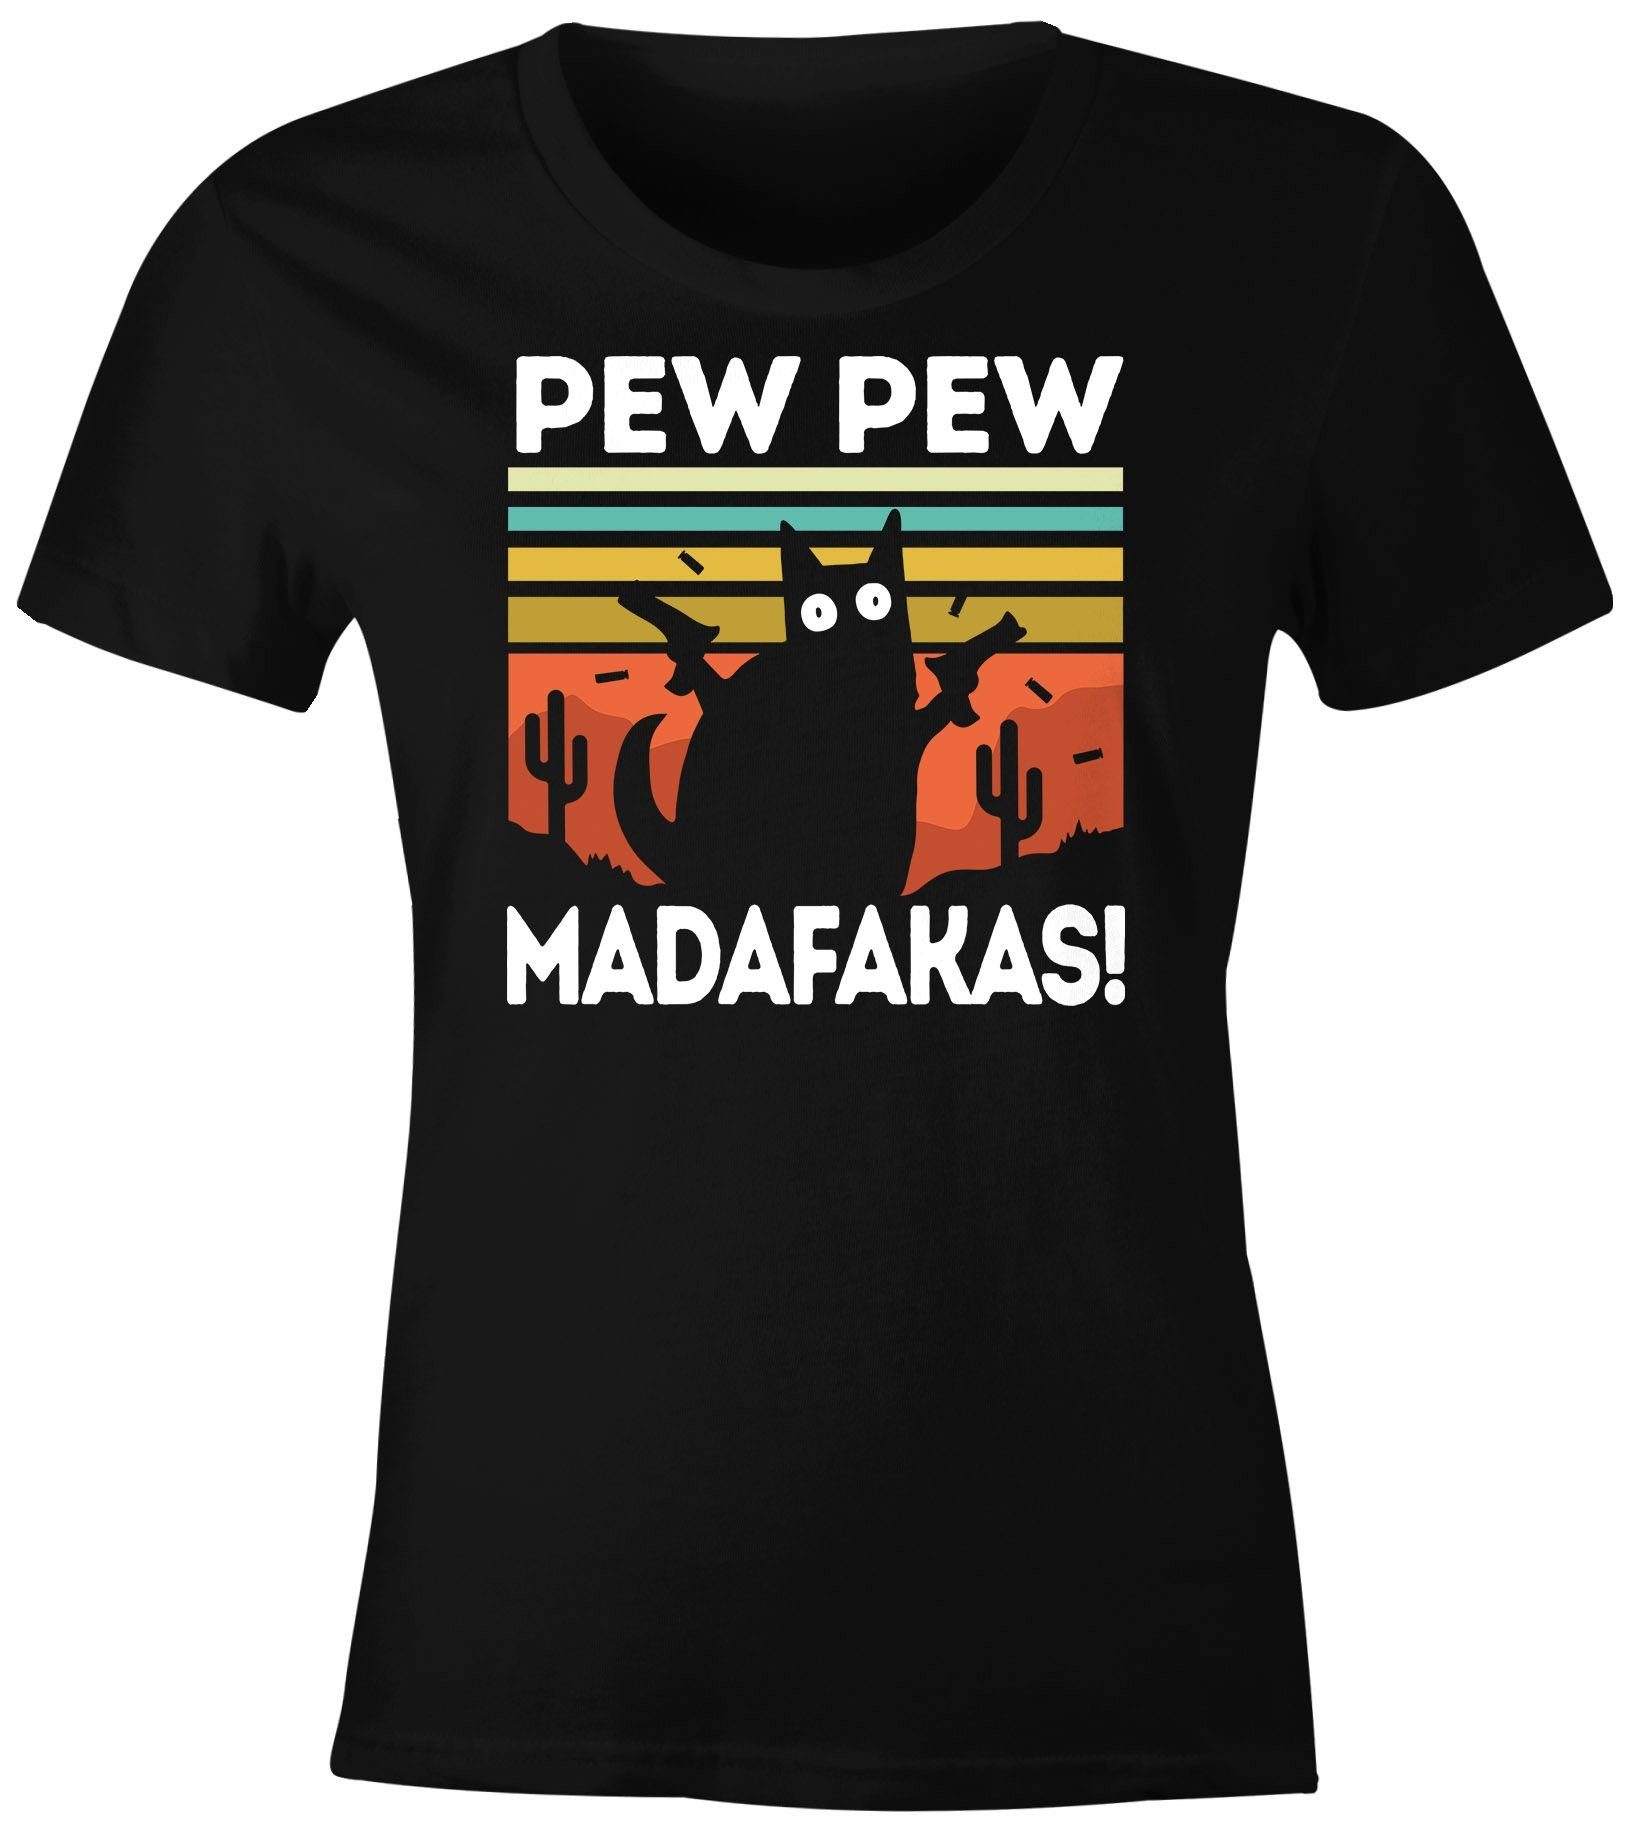 MoonWorks Print-Shirt Print Spruch Meme mit Madafakas! Fun-Shirt Frauen Moonworks® Pew Katze schwarze lustig T-Shirt Pew Damen